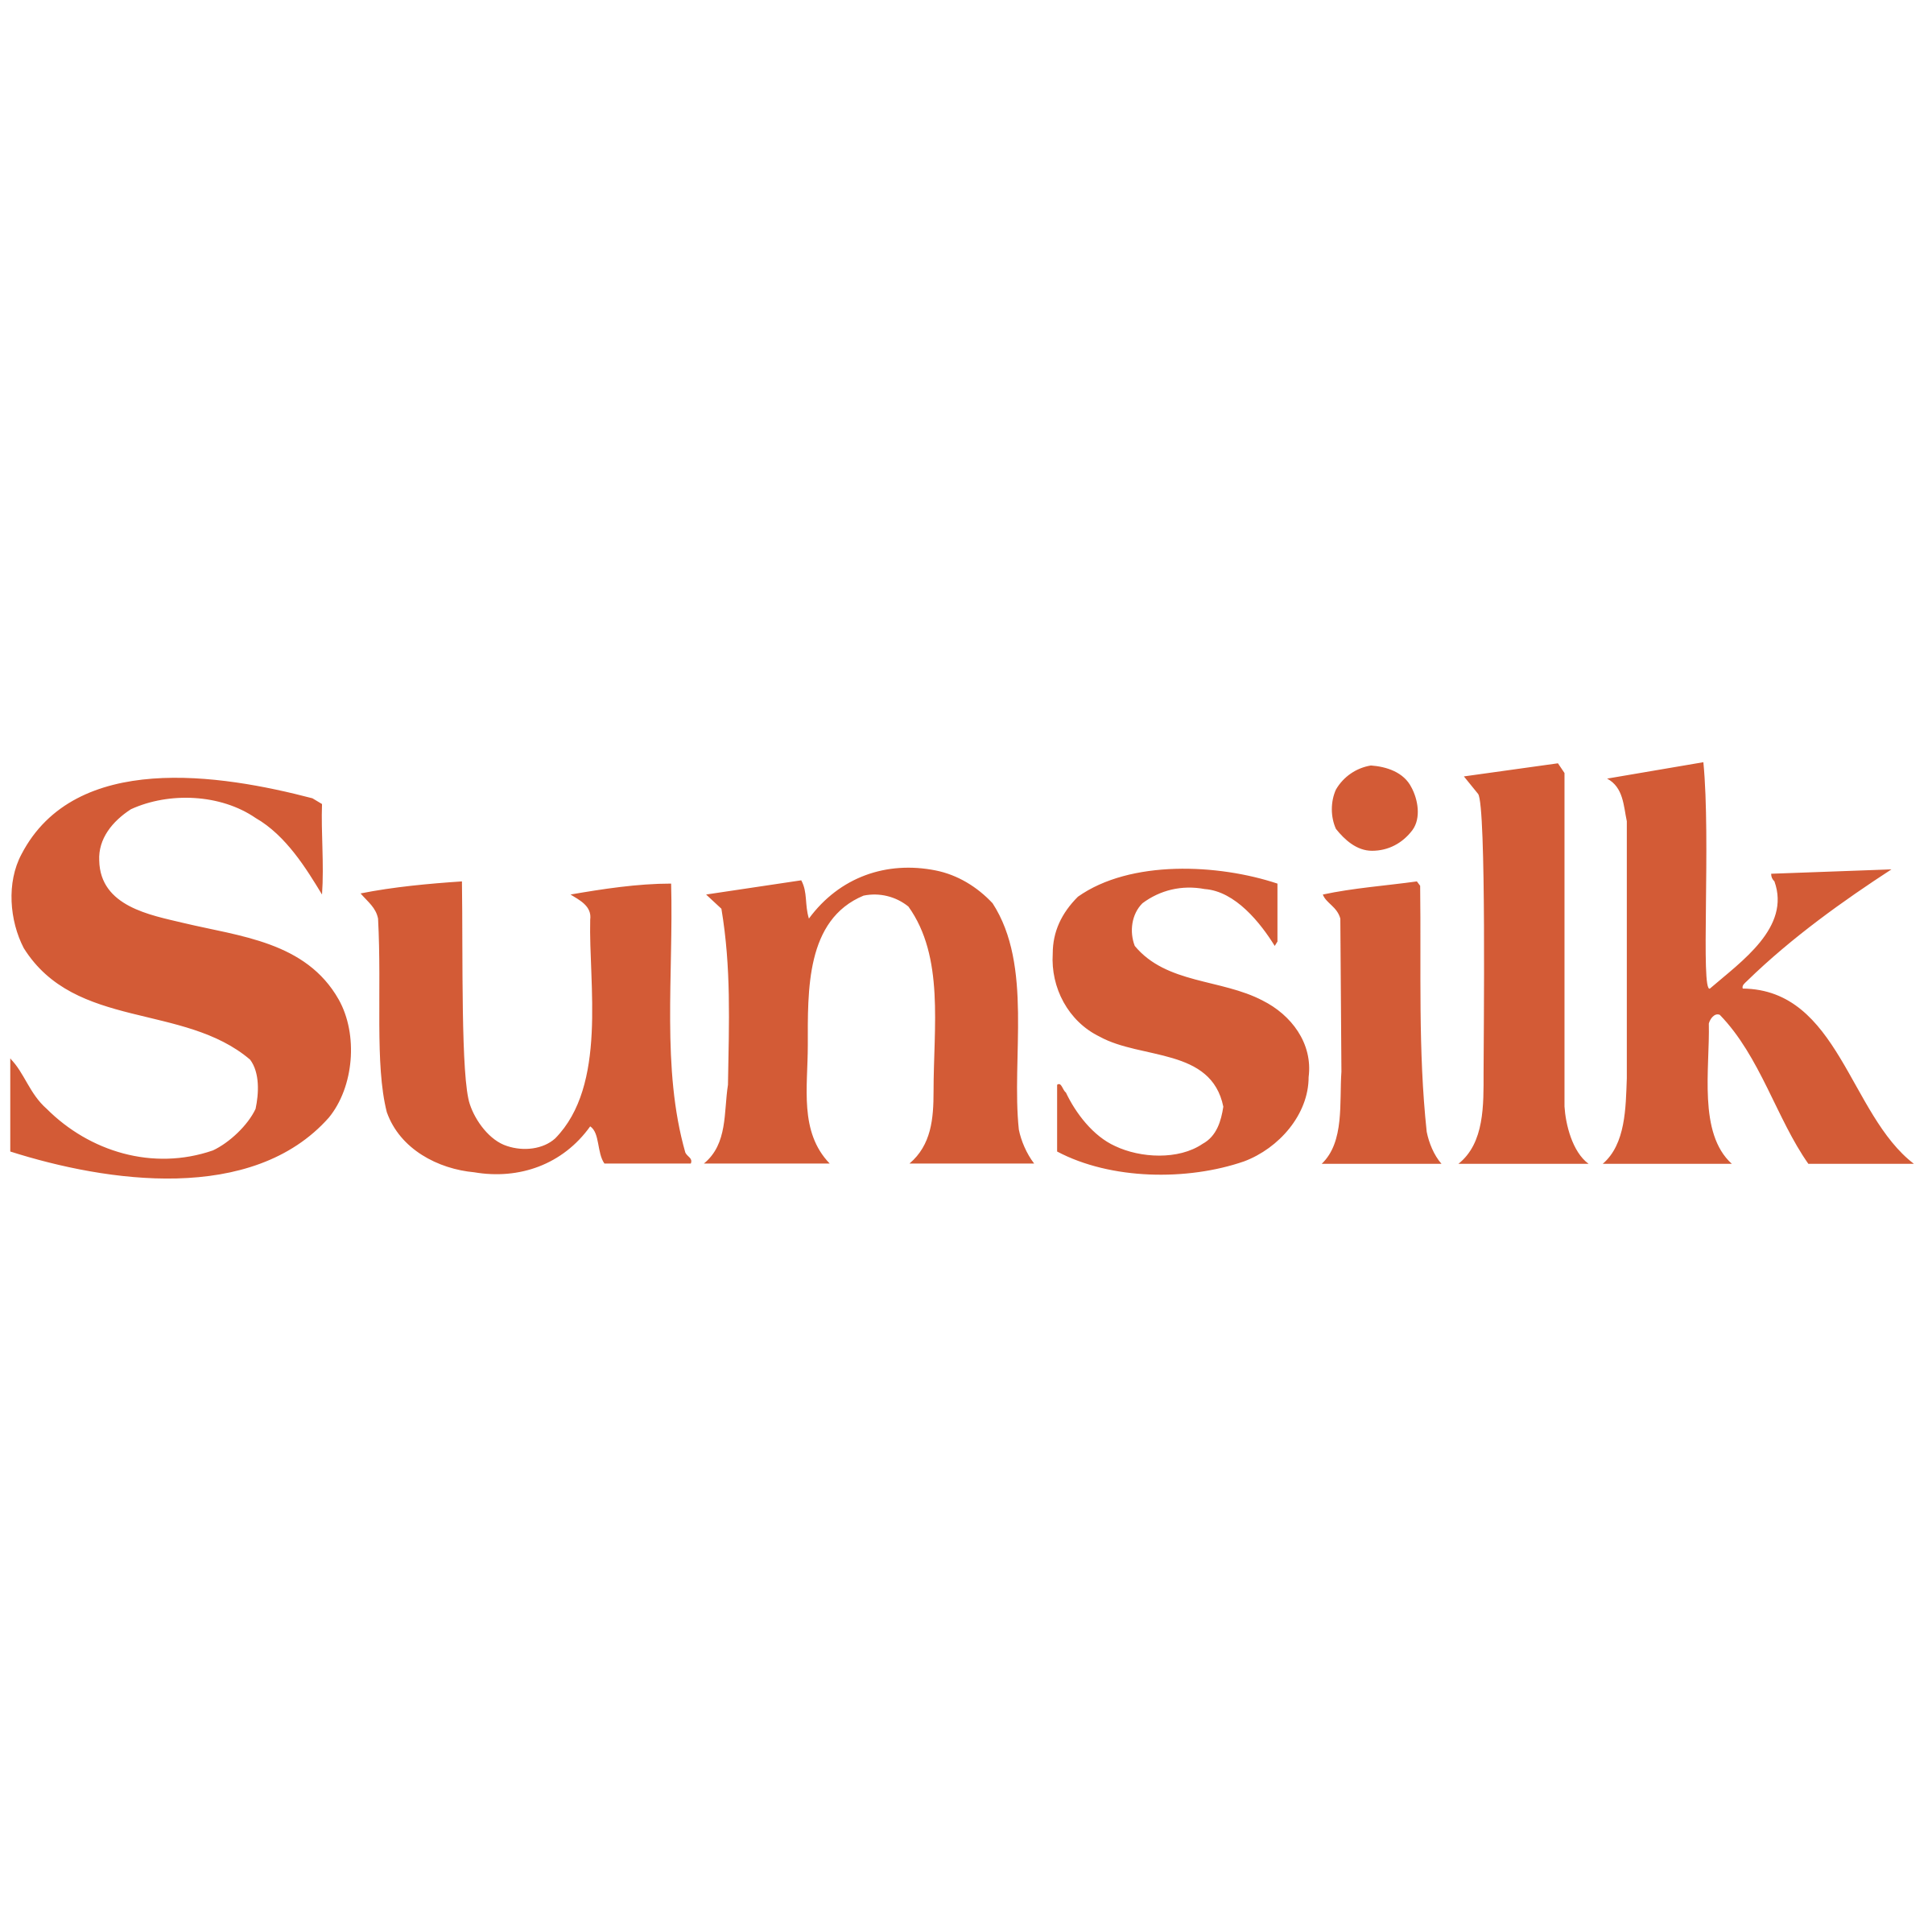 Sunsilk Logo - Sunsilk Logo PNG Transparent & SVG Vector - Freebie Supply